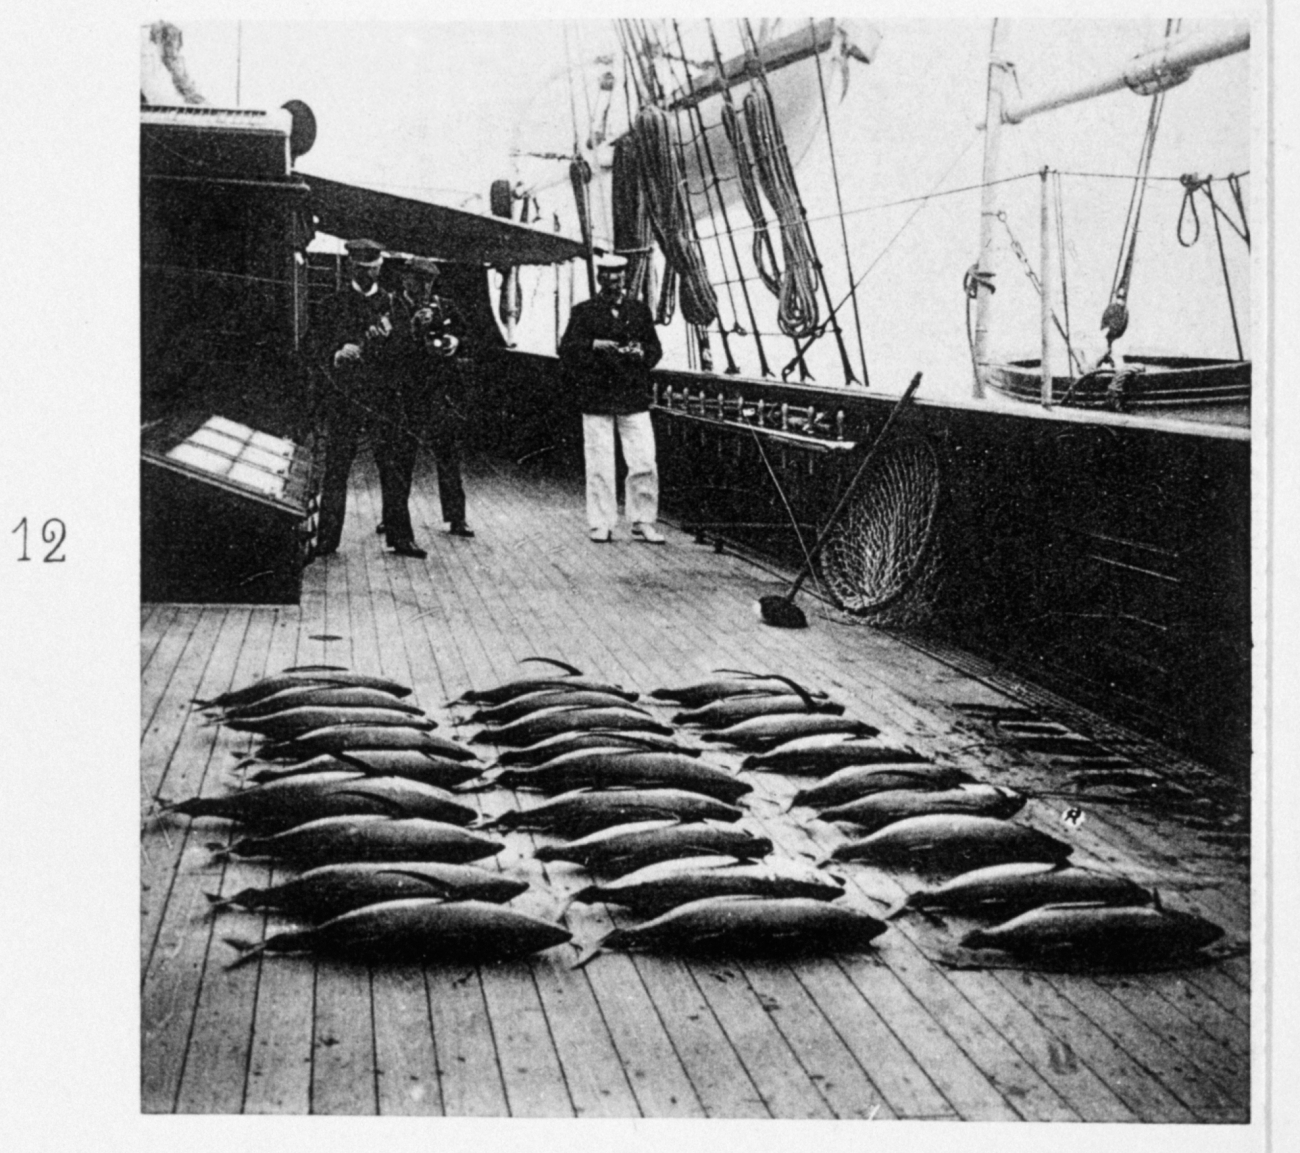 A catch of albacore tuna on the bridge deck